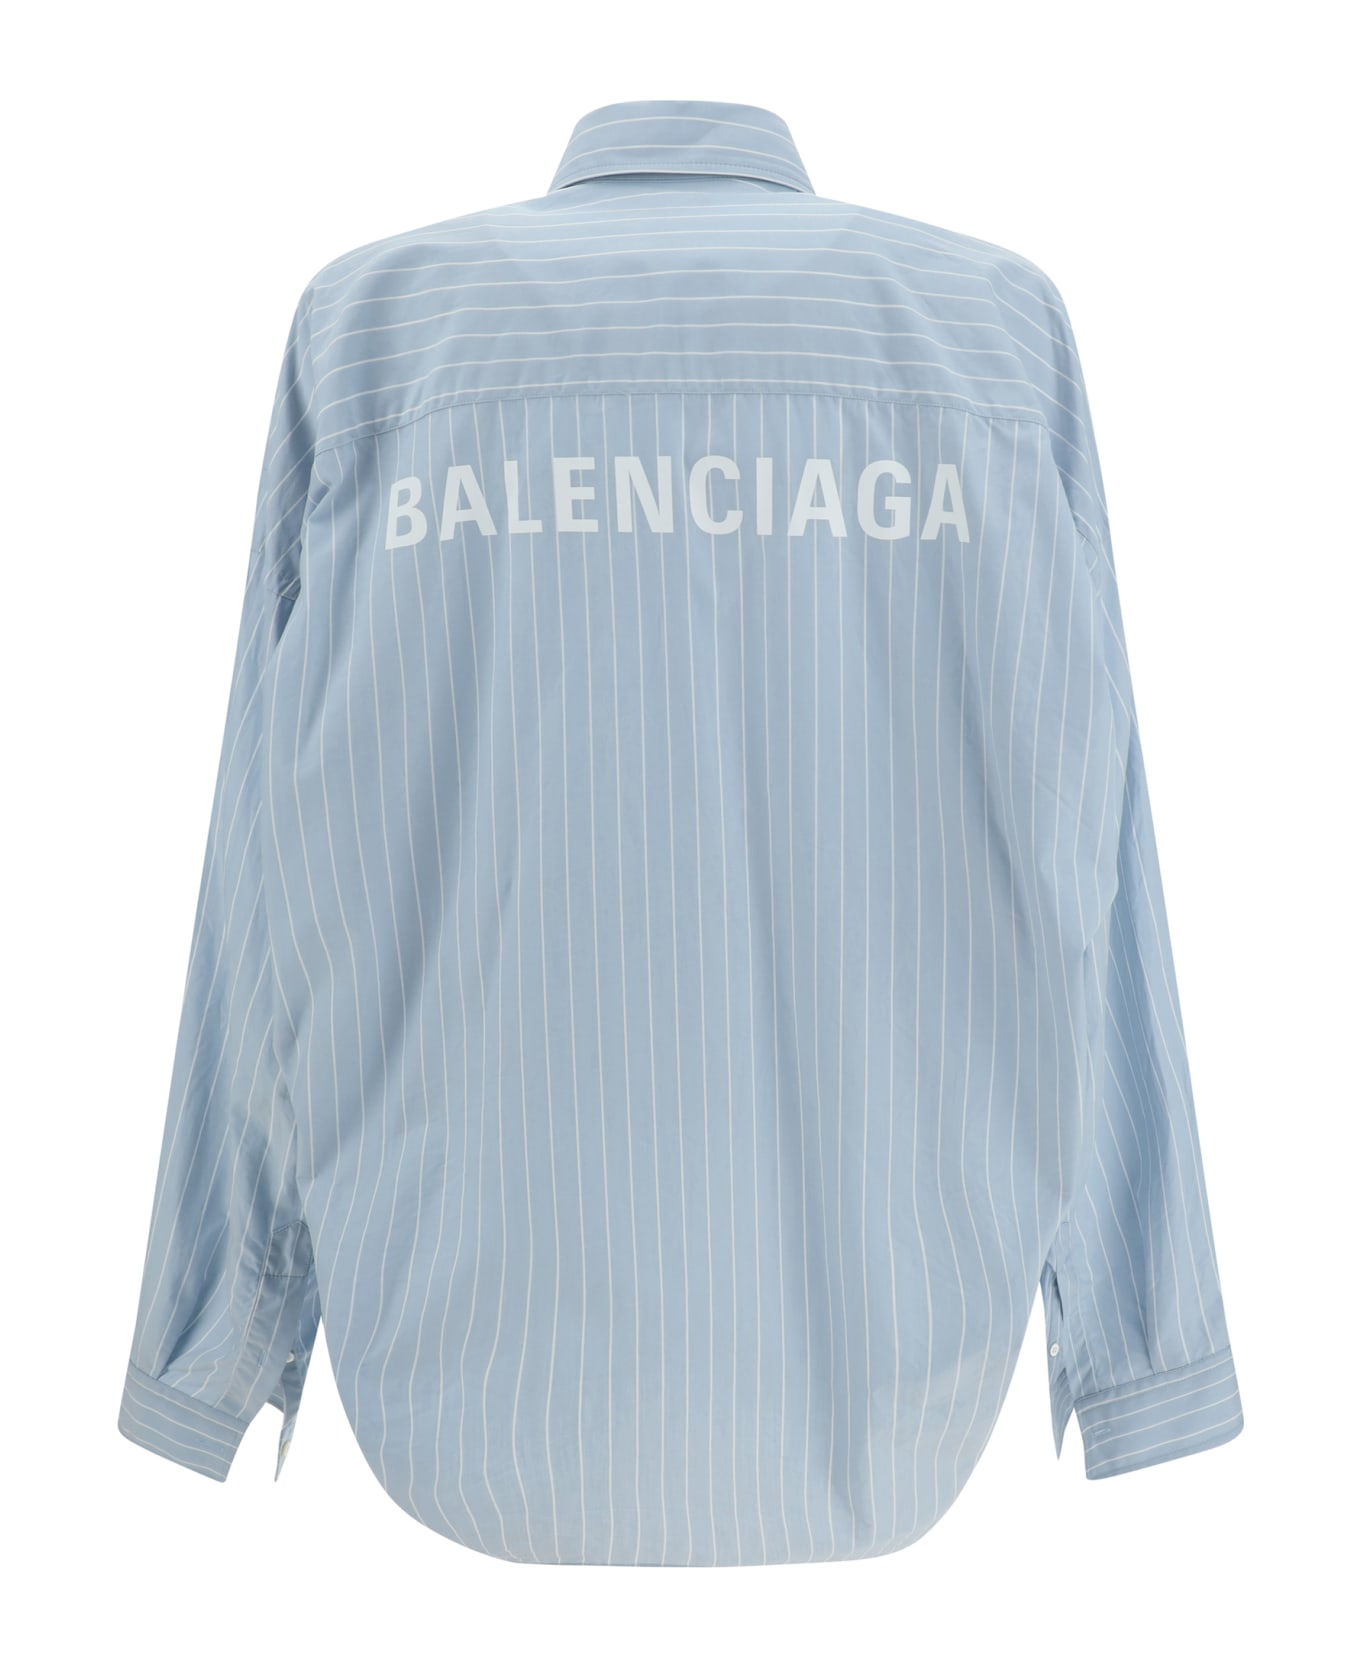 Balenciaga Cotton Shirt - Light Blue/white シャツ